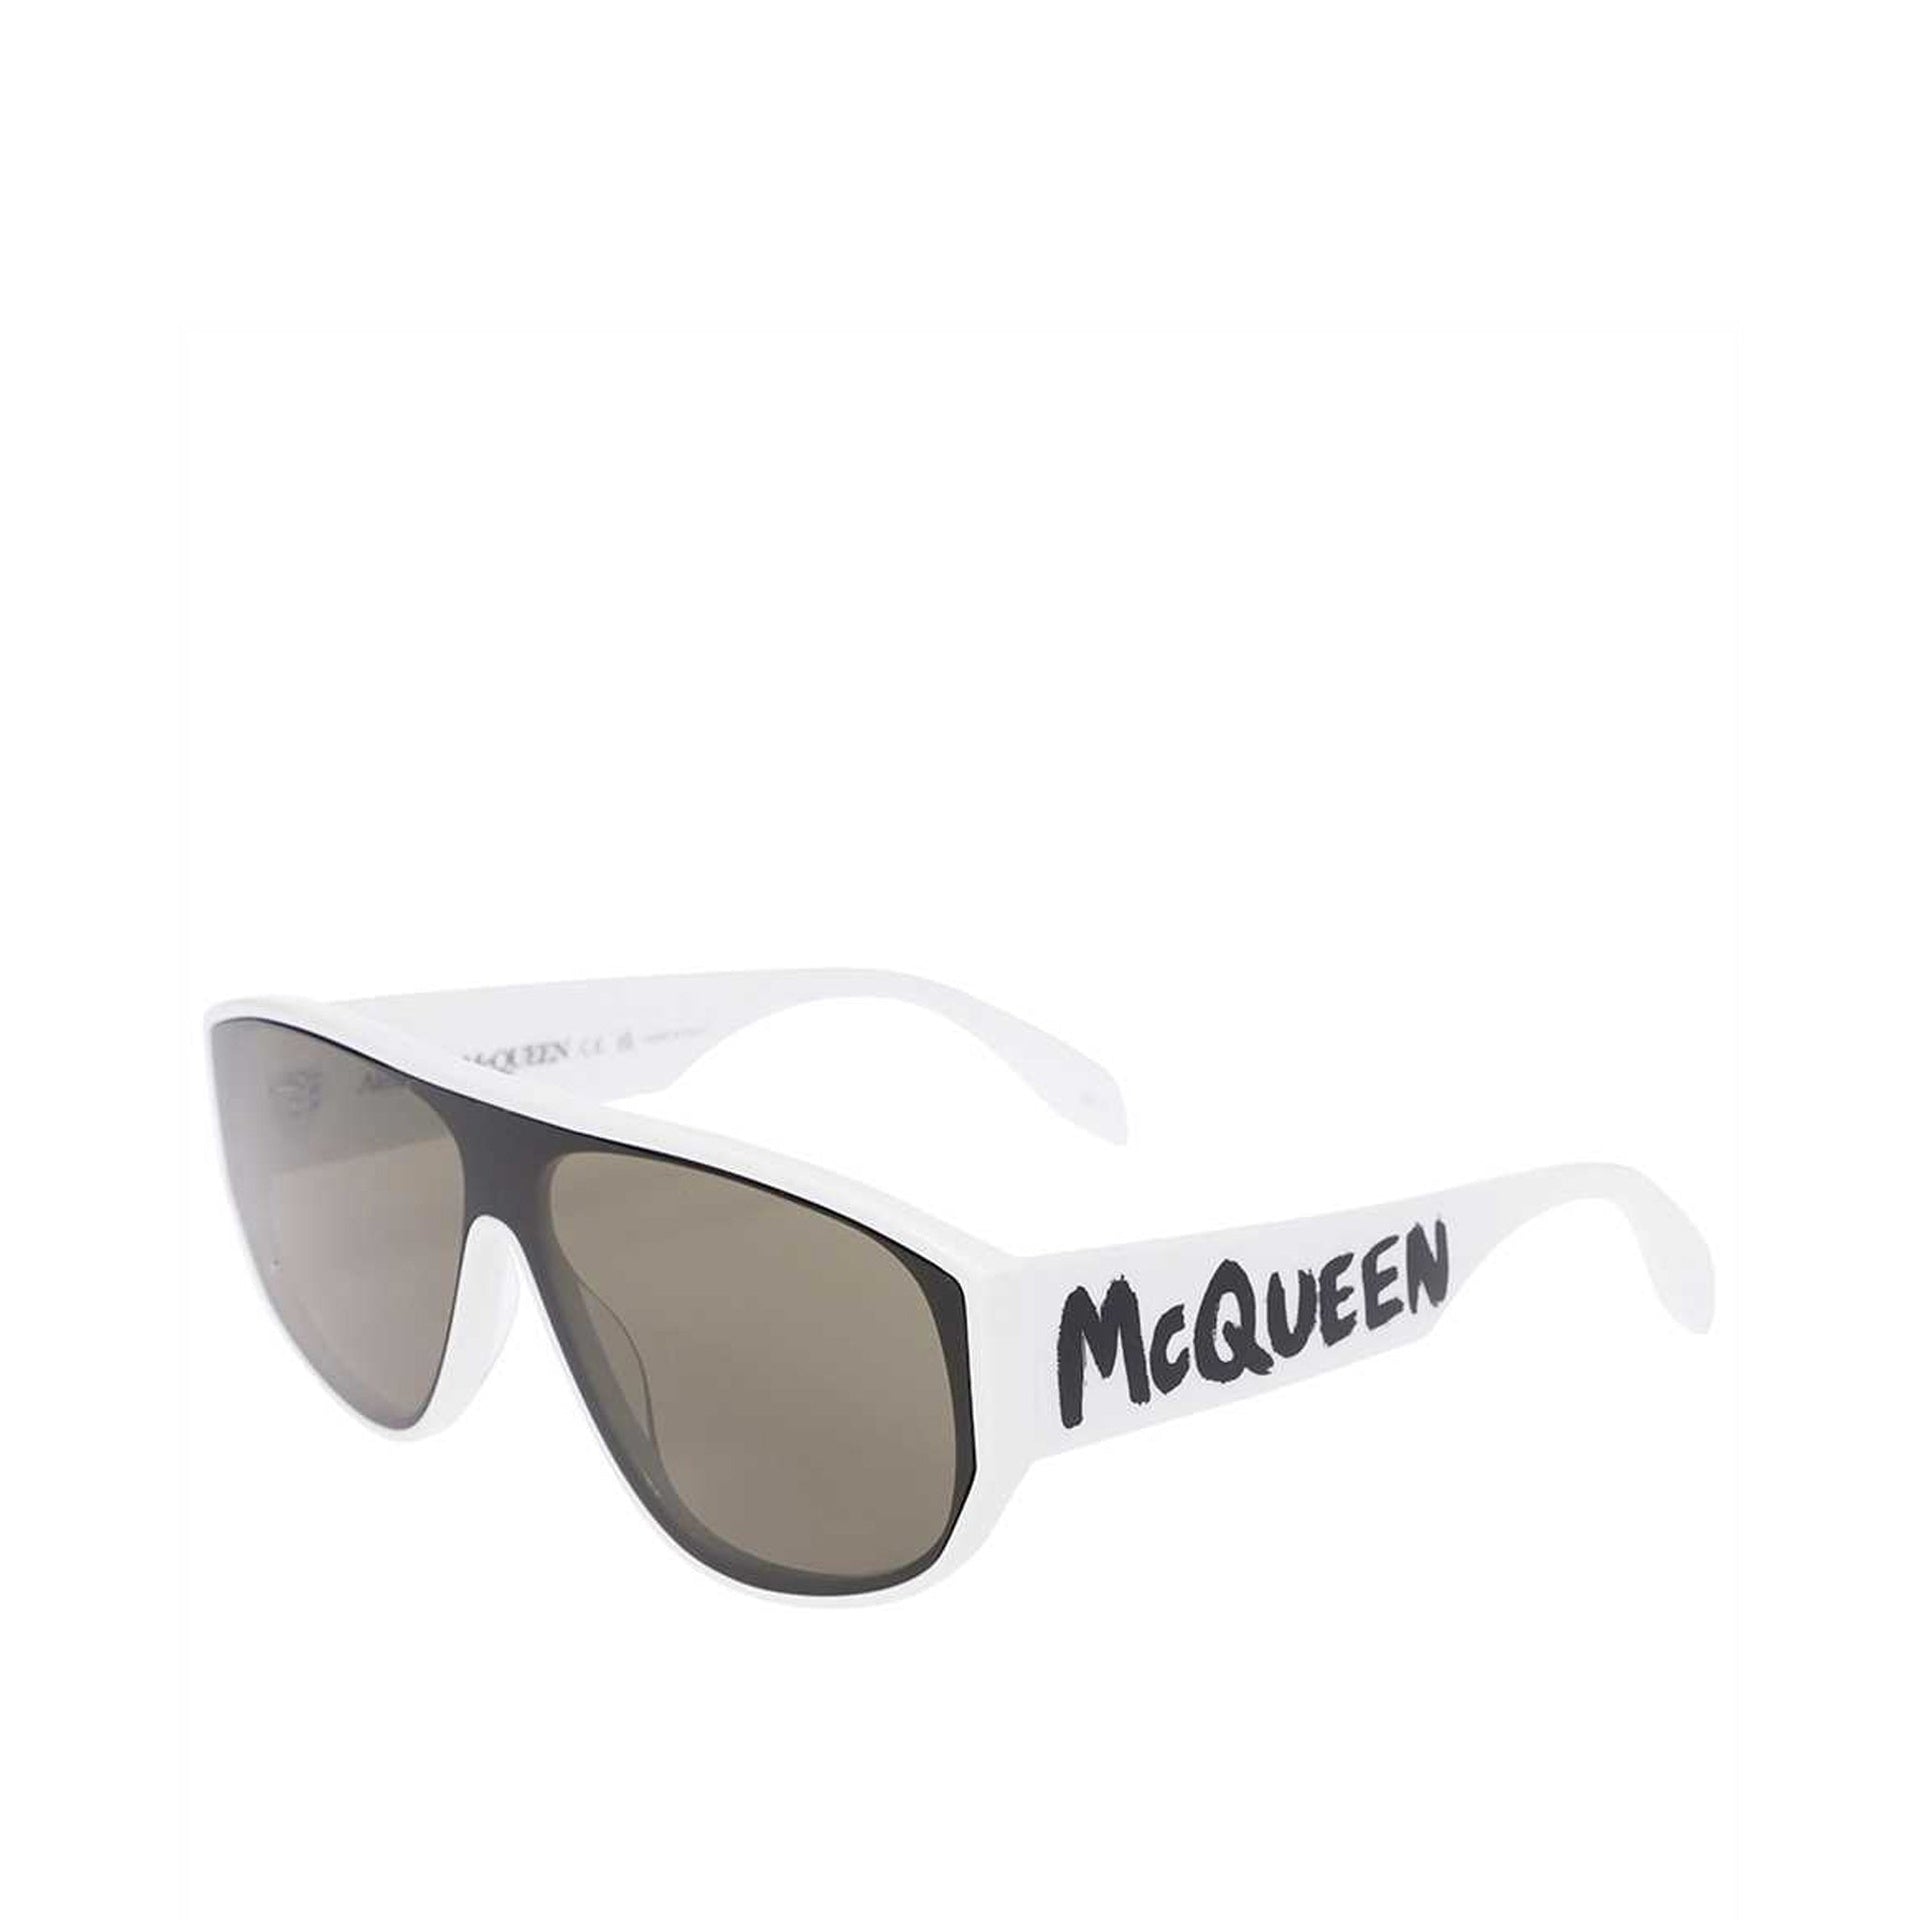 ALEXANDER-MCQUEEN-OUTLET-SALE-Alexander-Mcqueen-Logo-Sunglasses-Sonnenbrille-WHITE-UNI-ARCHIVE-COLLECTION-2.jpg